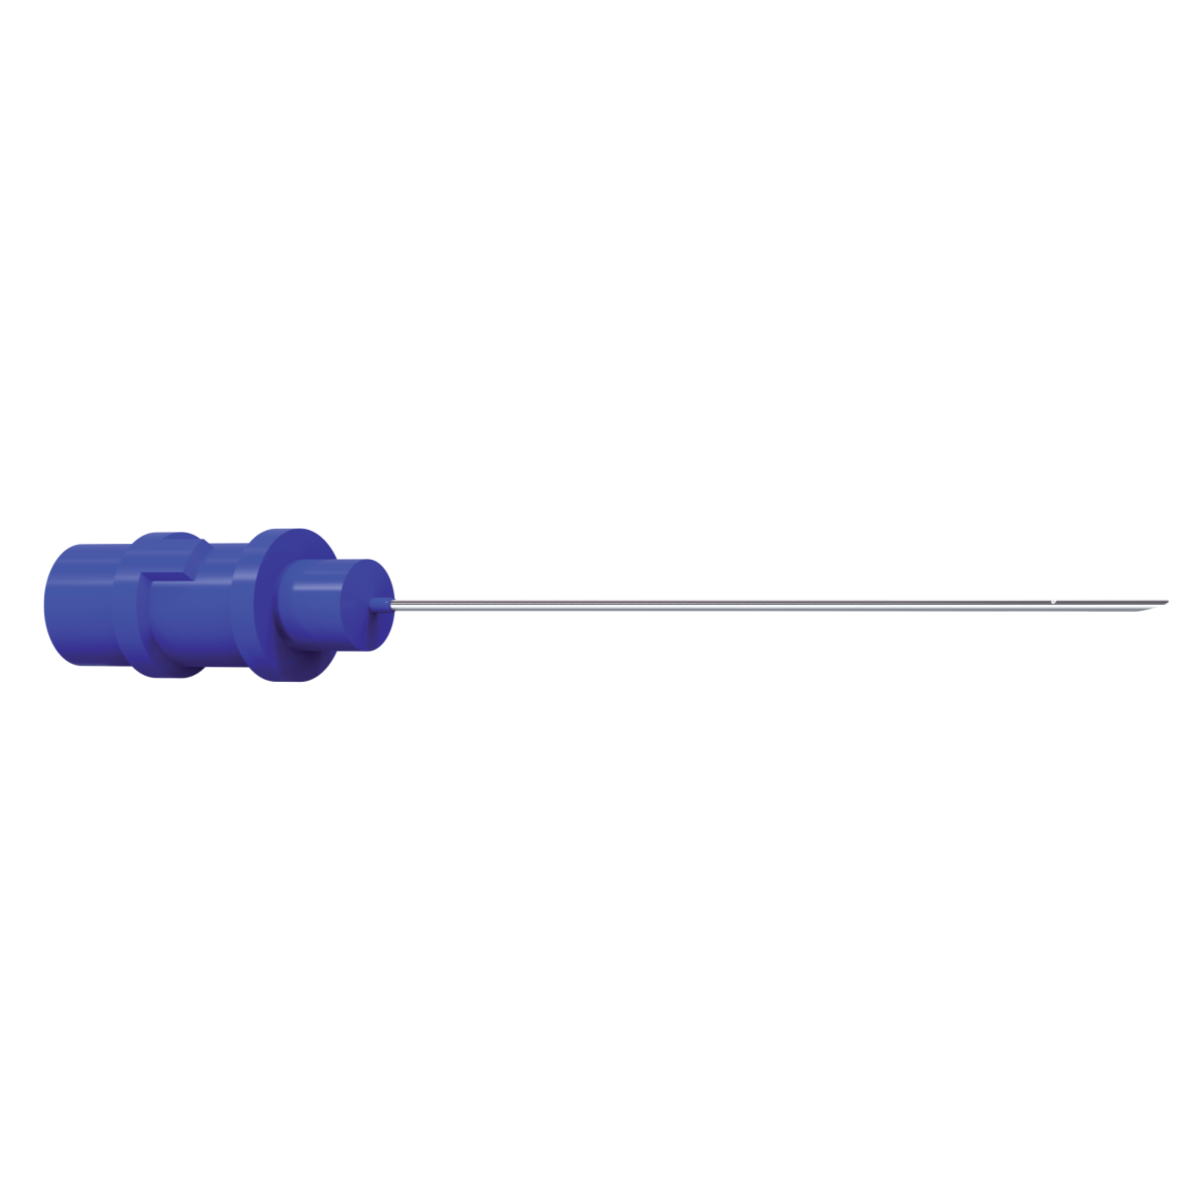 Single fiber needle